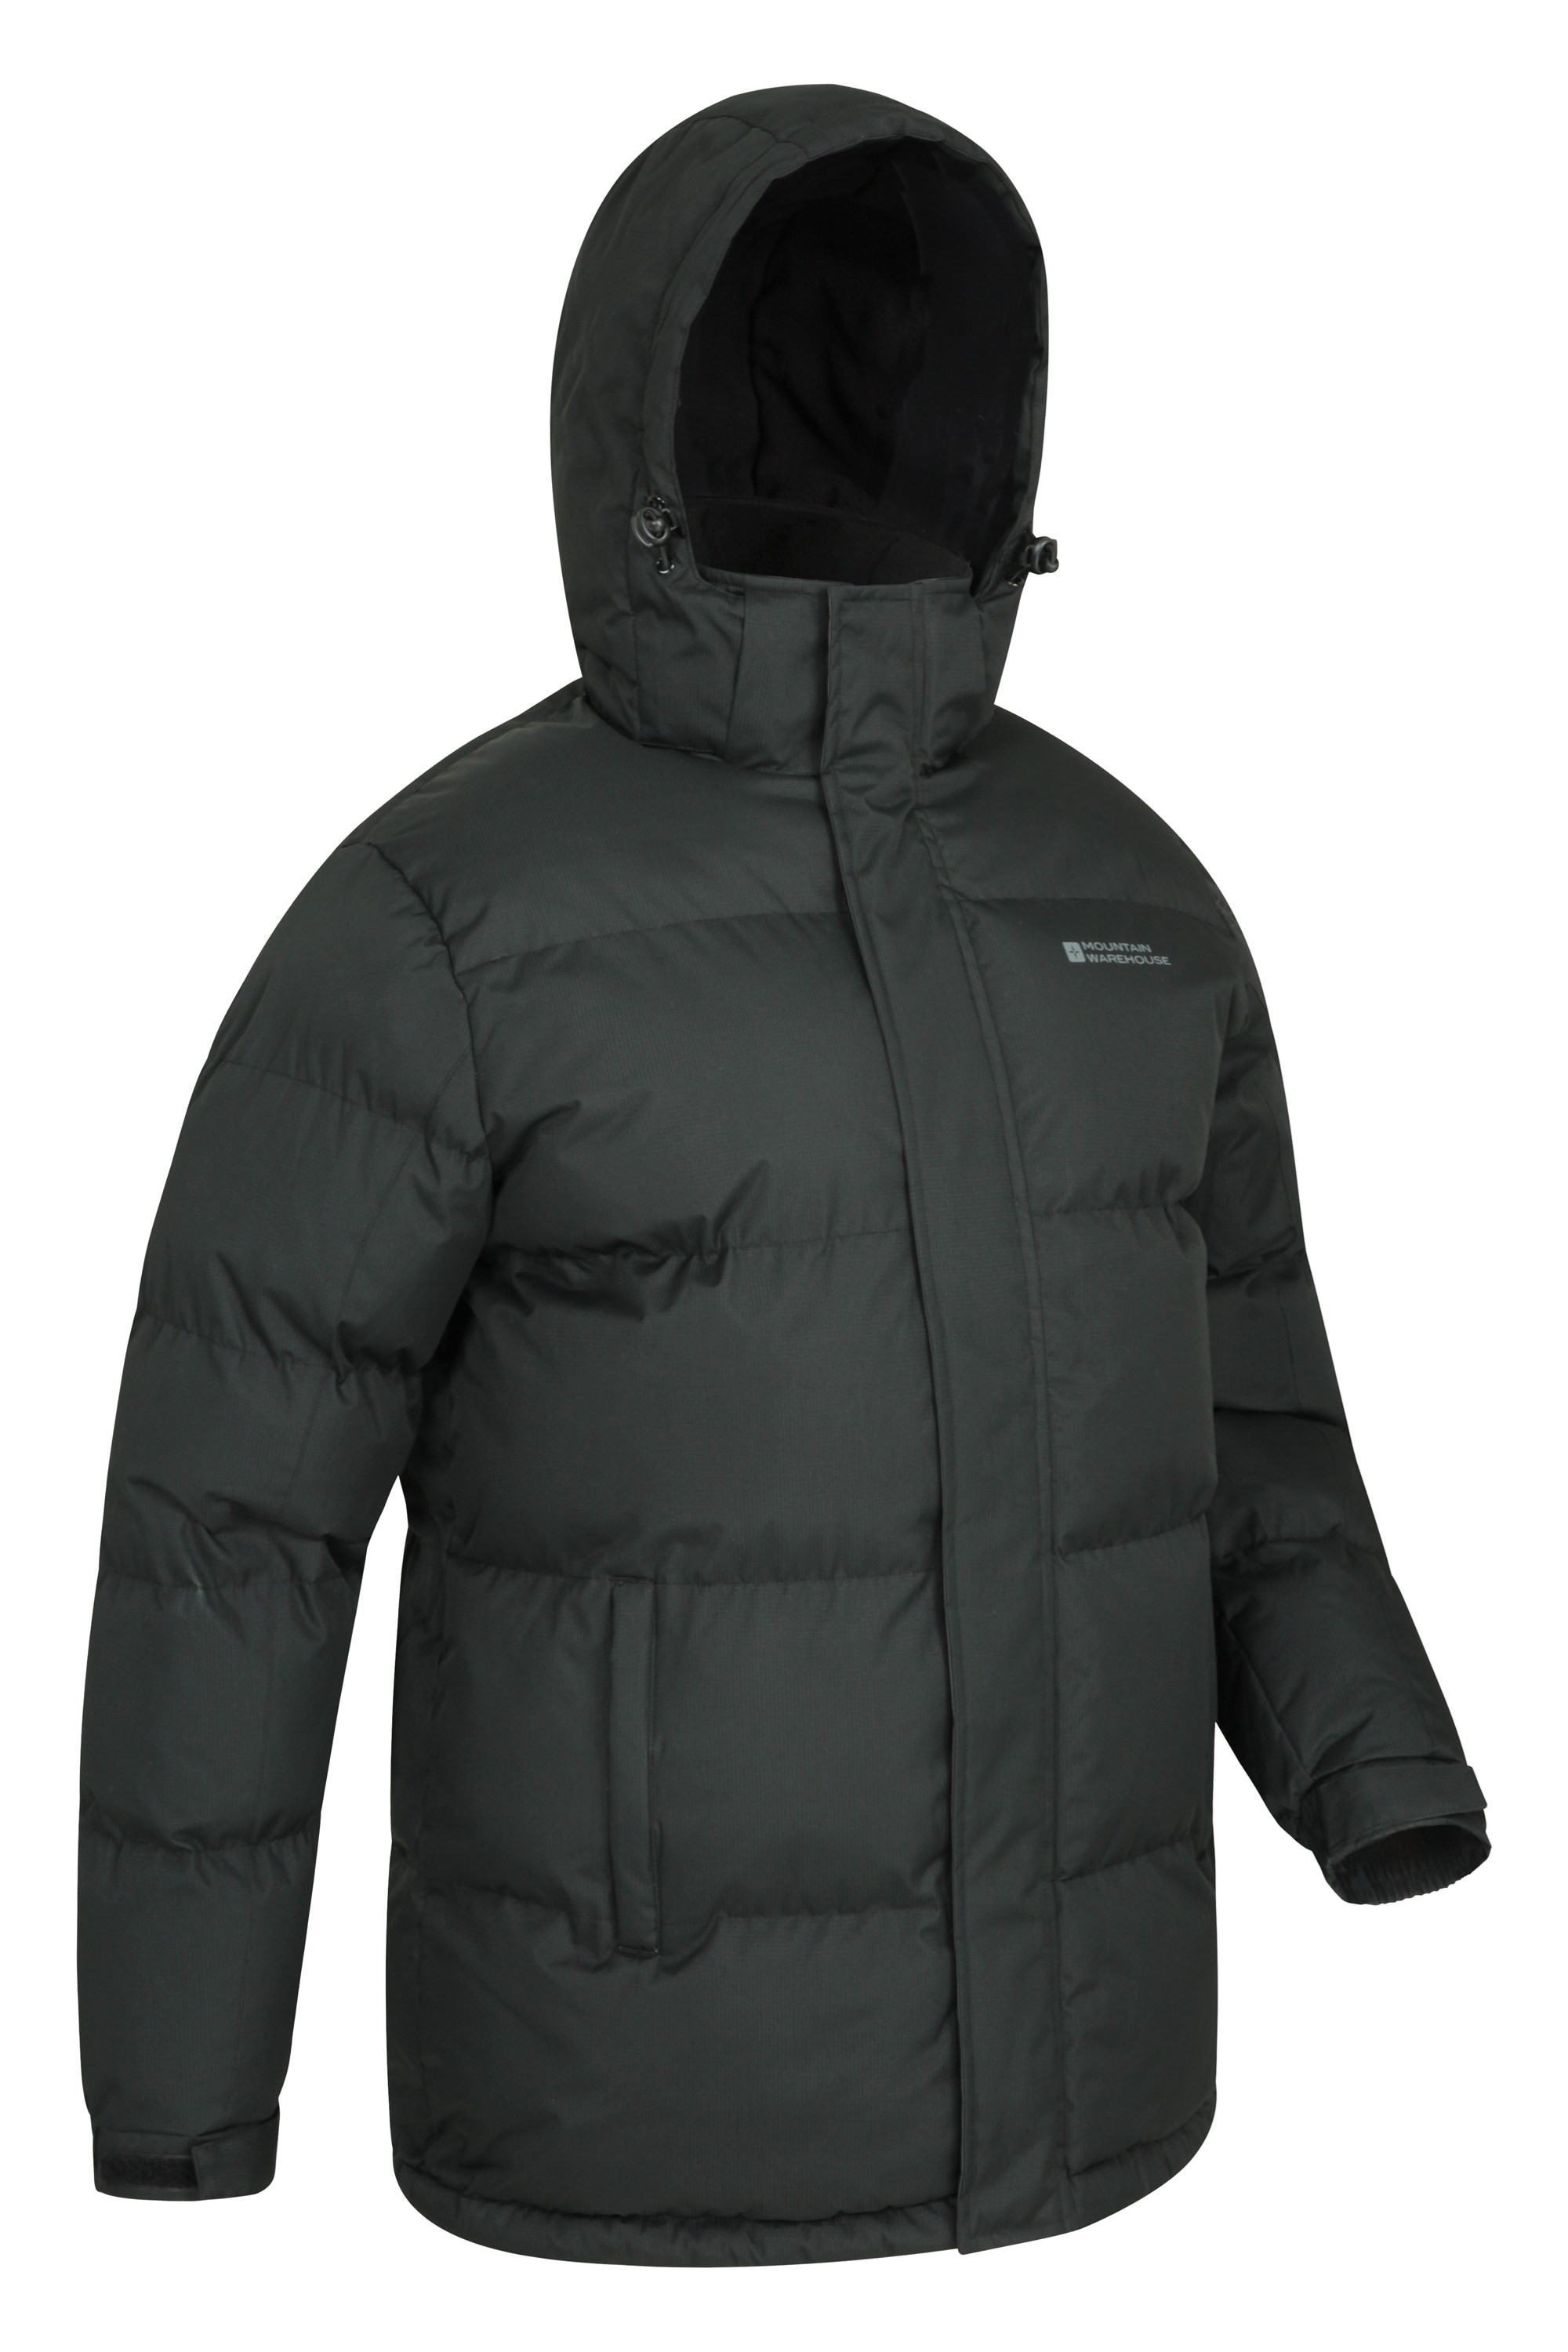 Mountain Warehouse Mens Lightweight Padded Jacket Insulated Winter Coat 